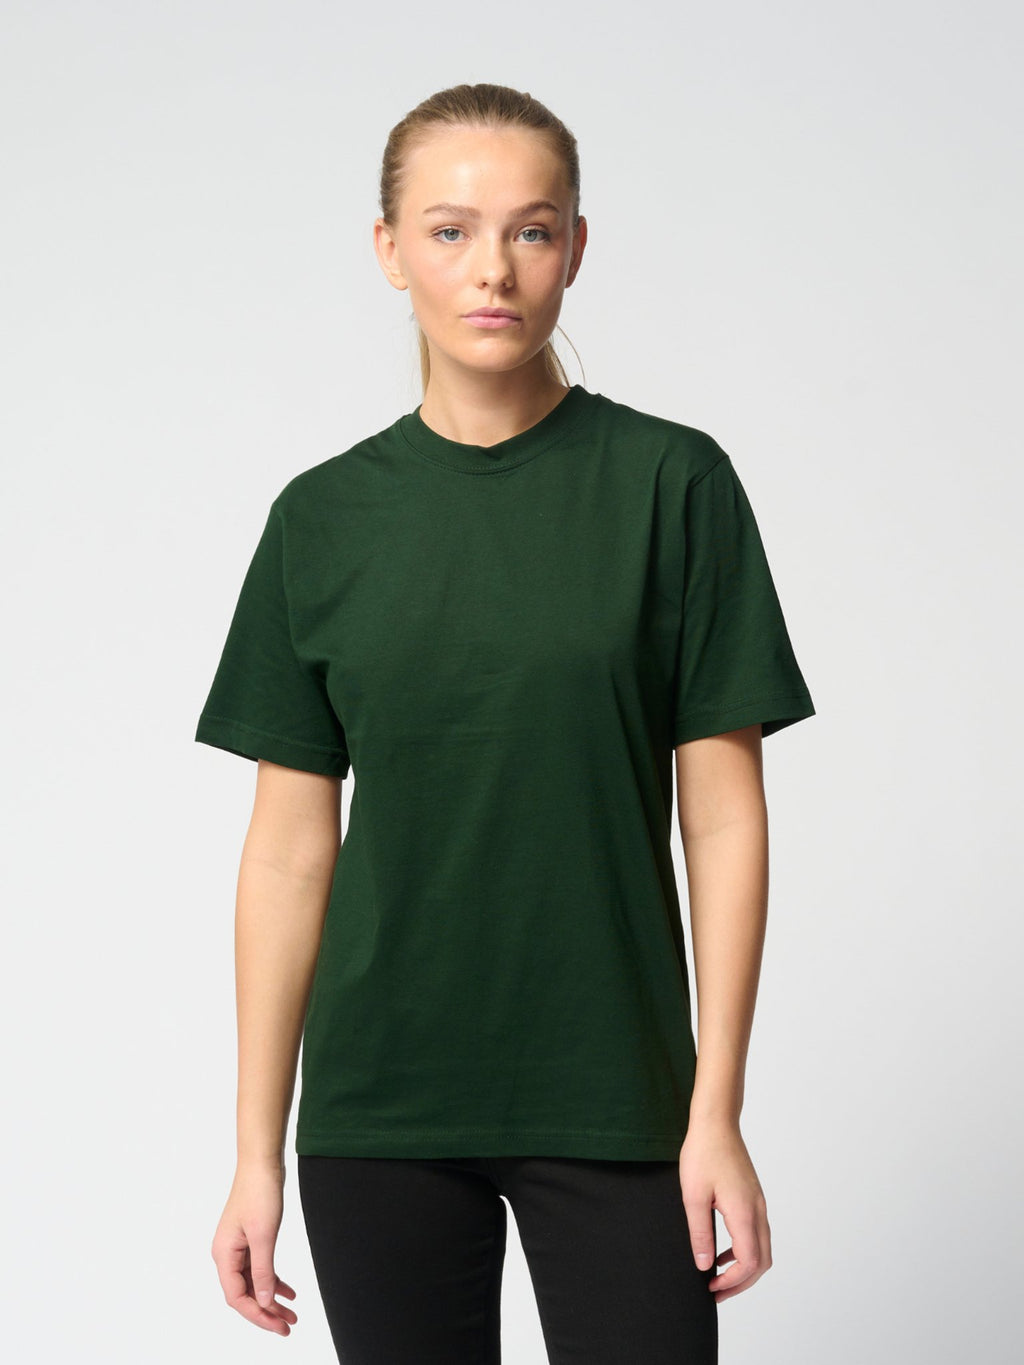 Oversized T-Shirt – Women's Package Deal (9 pcs.)